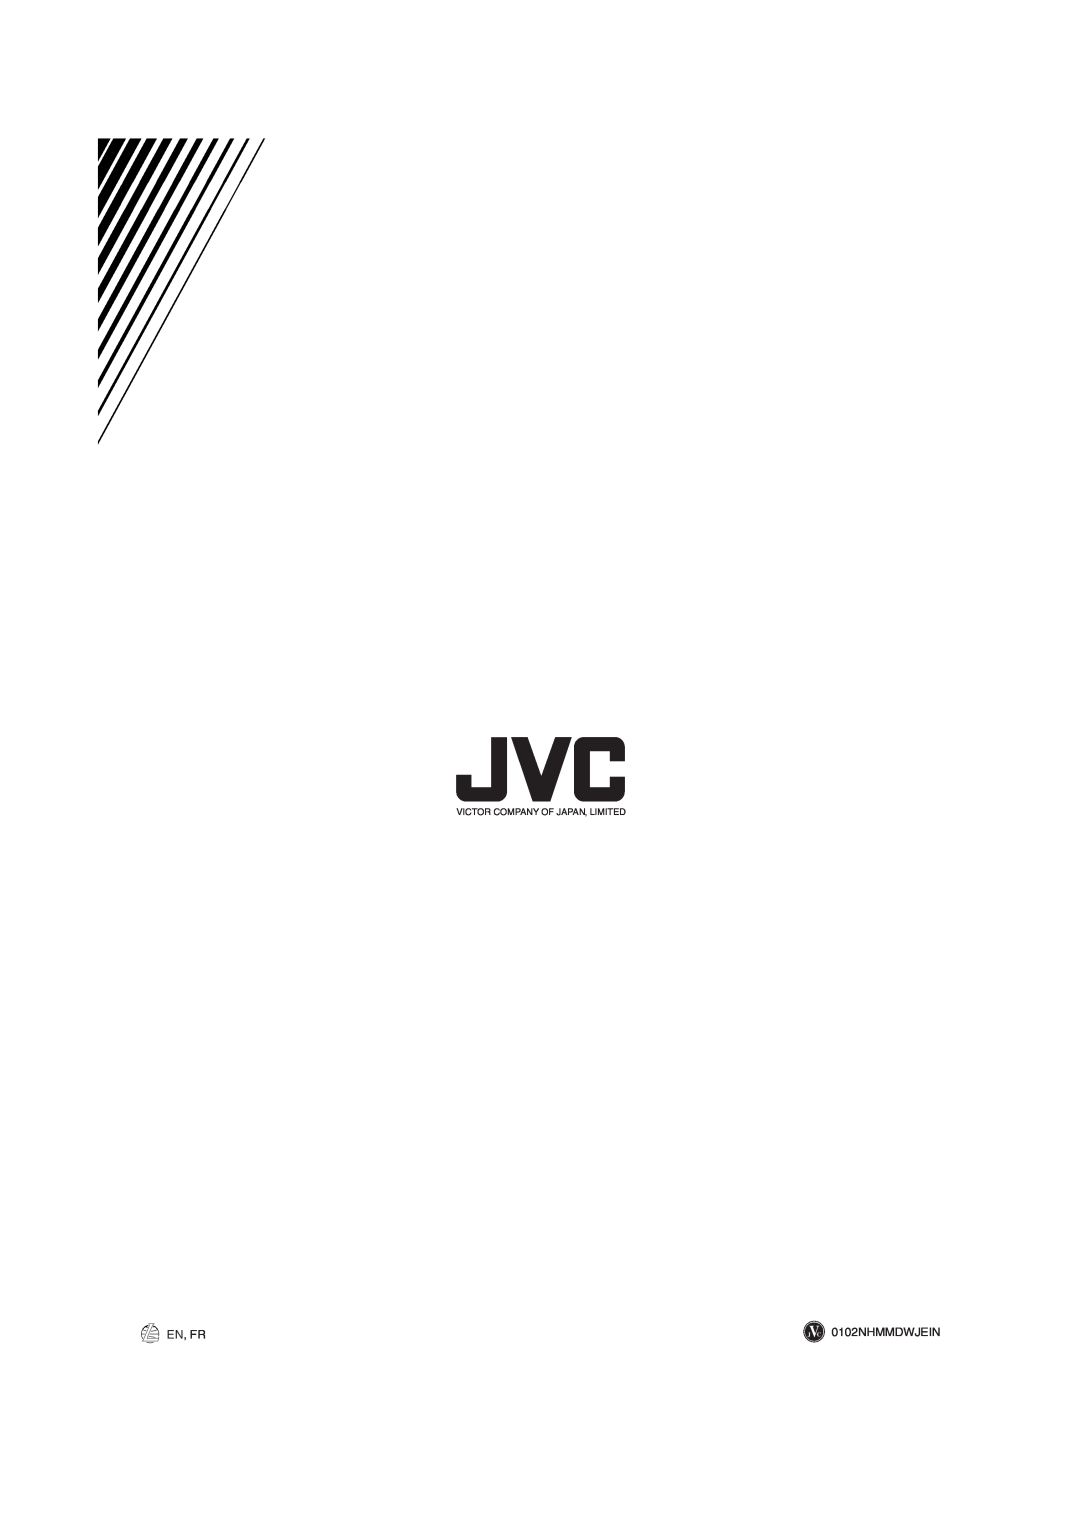 JVC RX-5022VSL, RX-5020VBK manual En, Fr, J C 0102NHMMDWJEIN, Victor Company Of Japan, Limited 